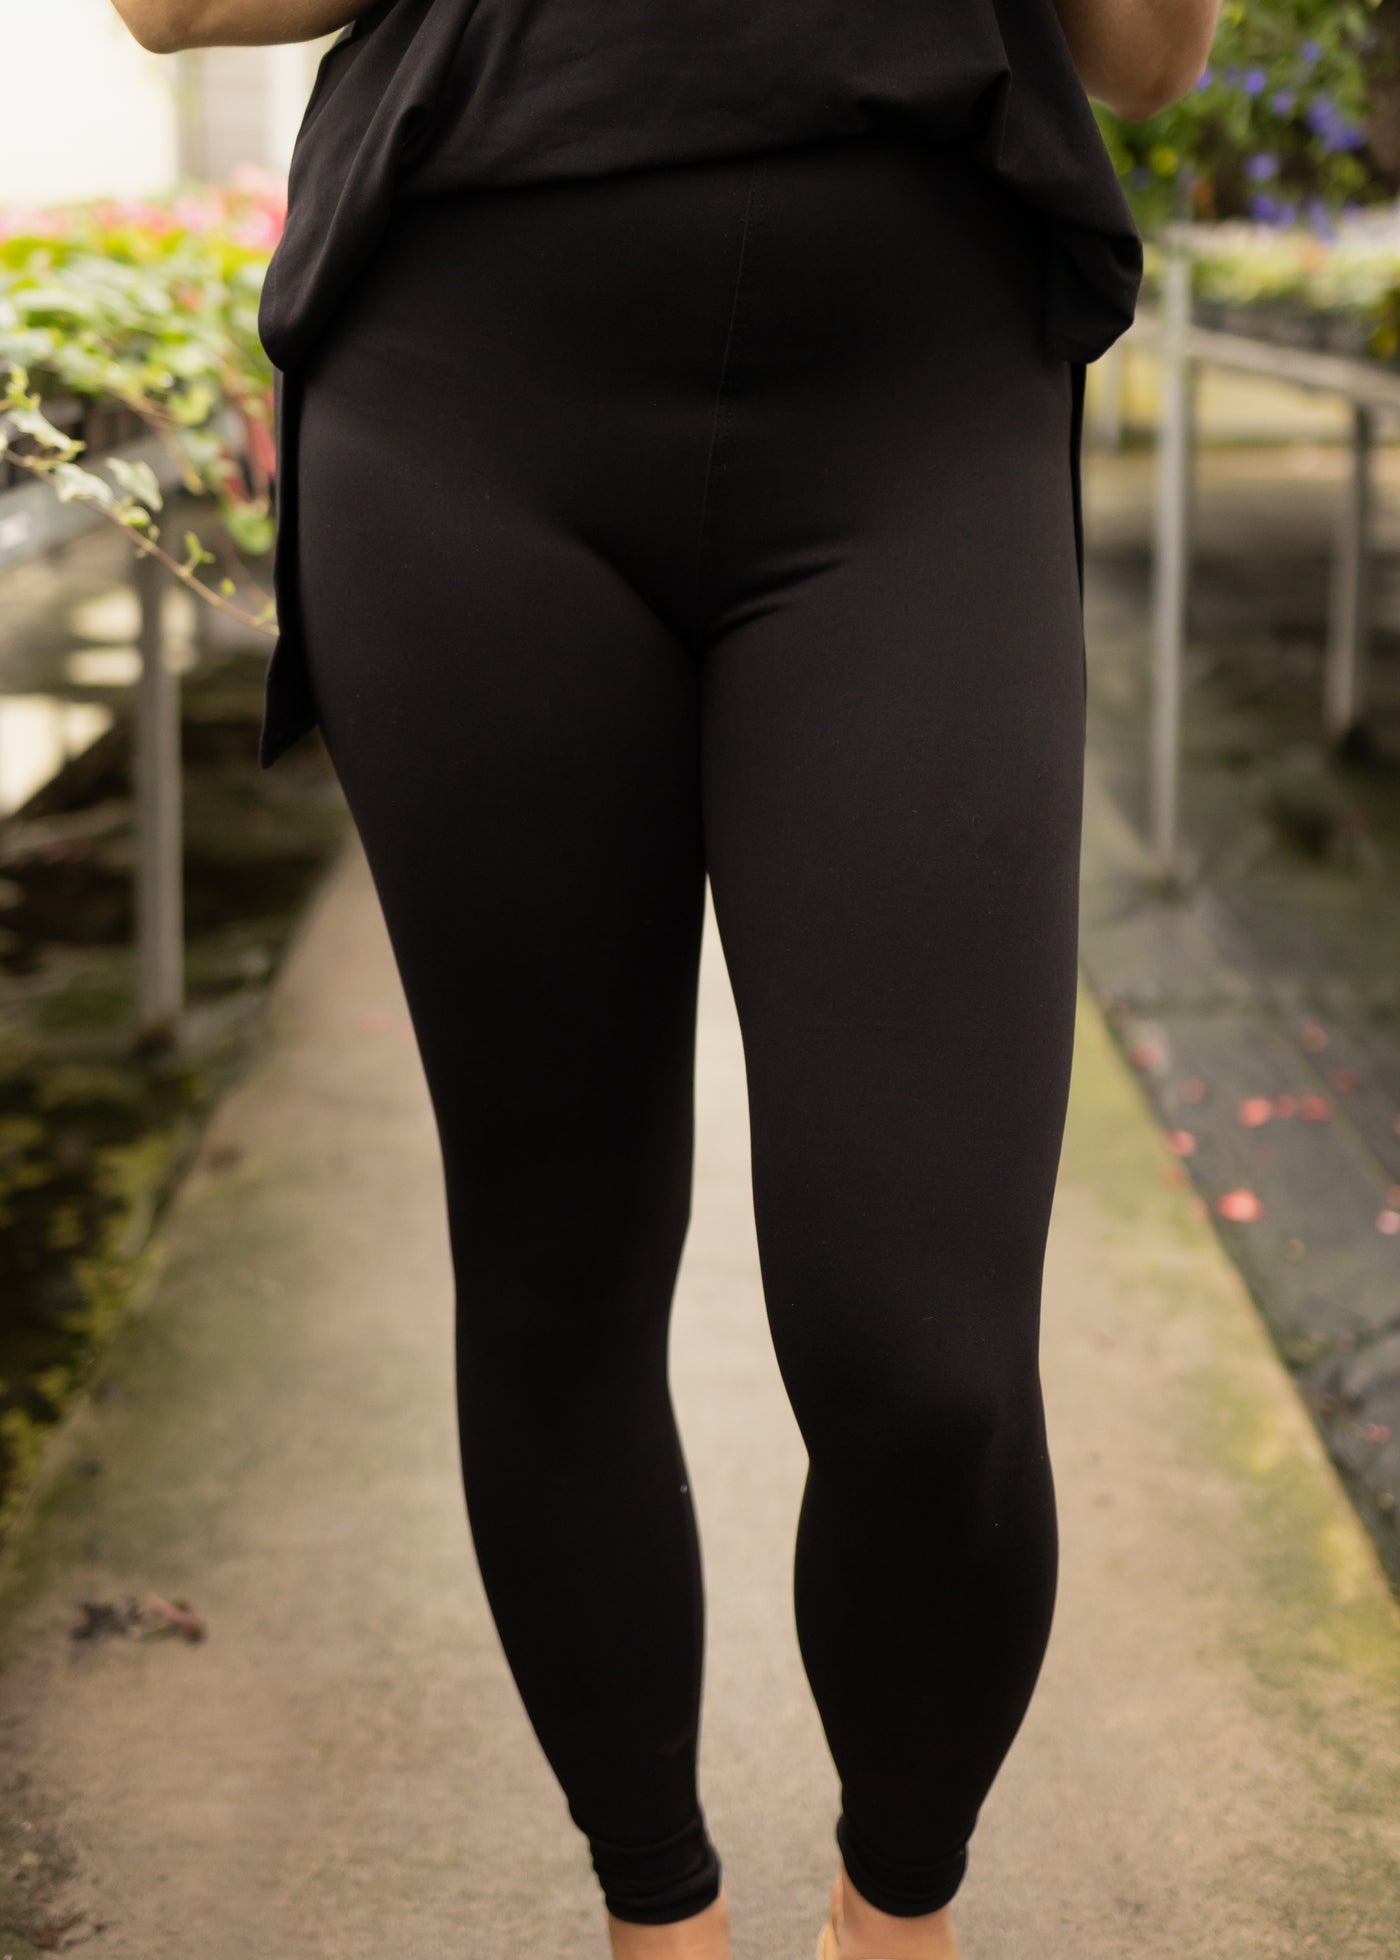 Pants of a black legging set